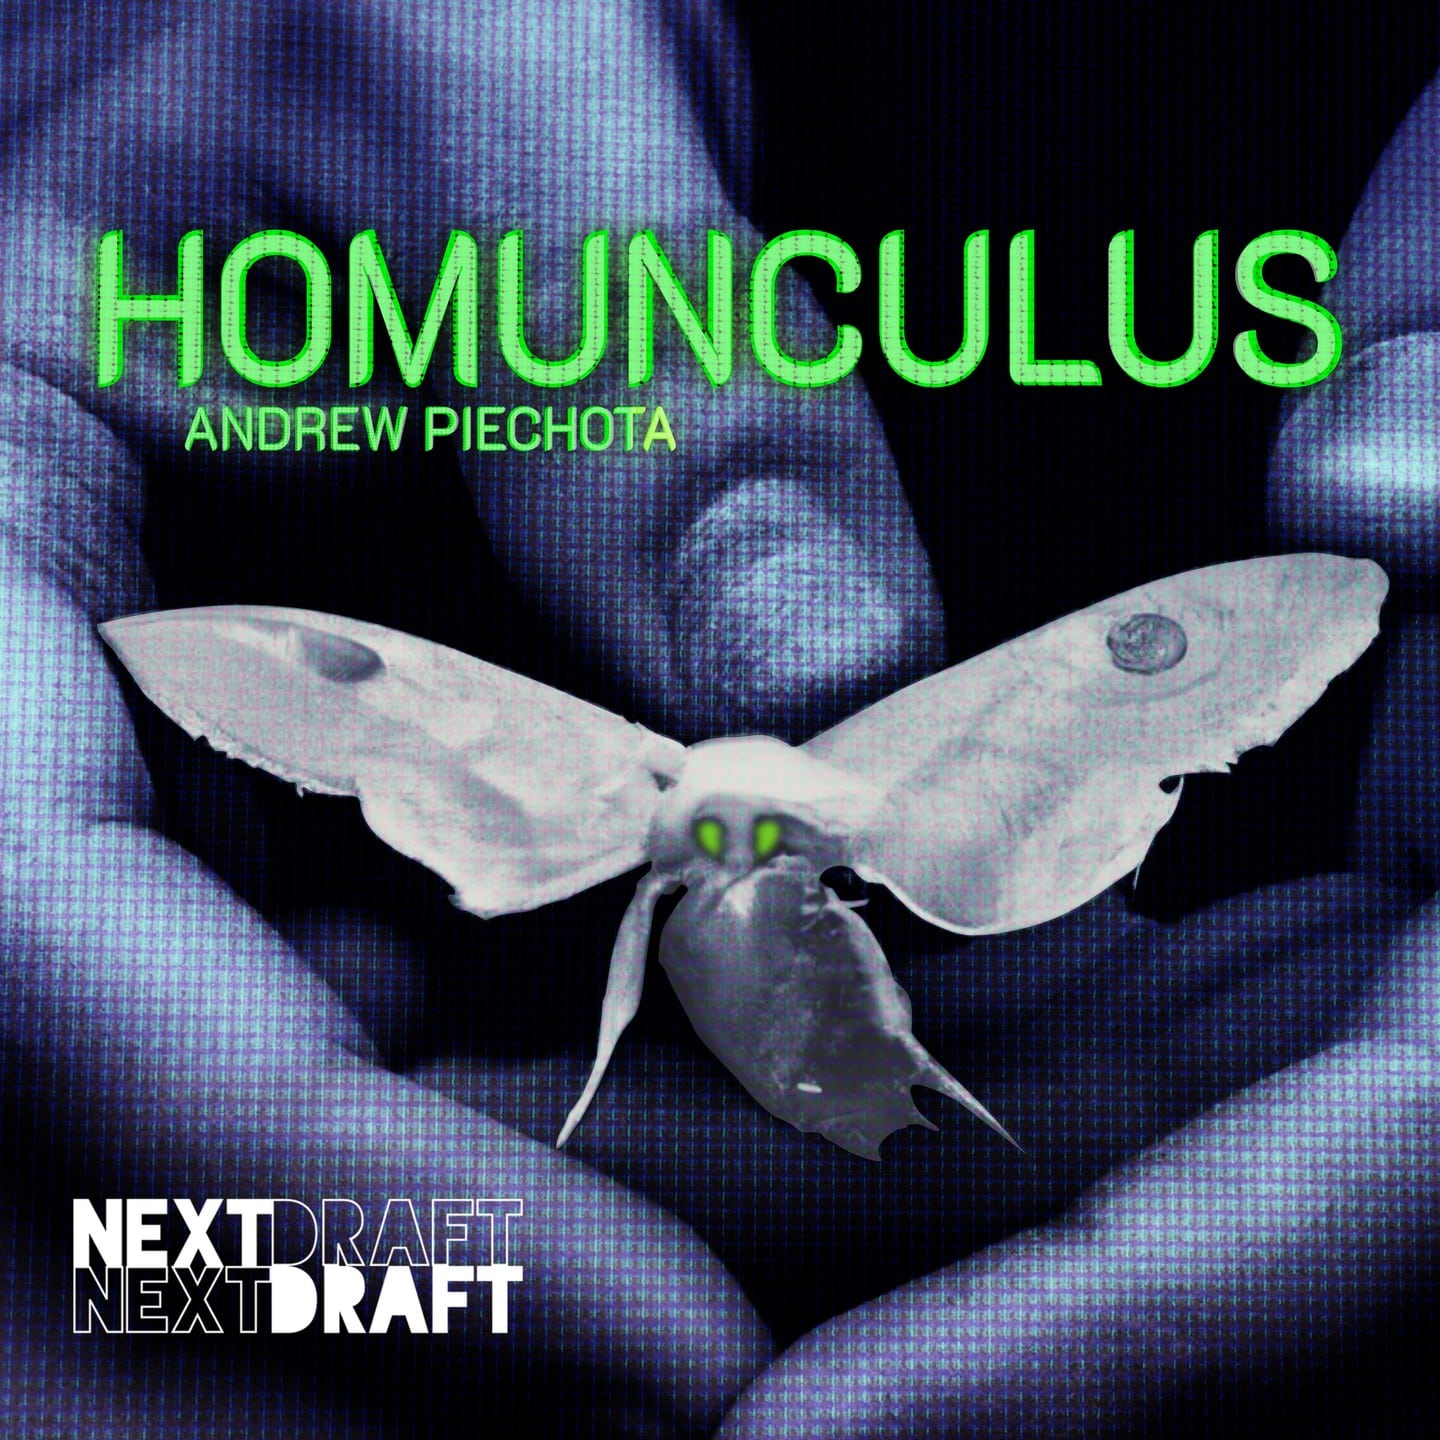 Homunculus by Andrew Piechota